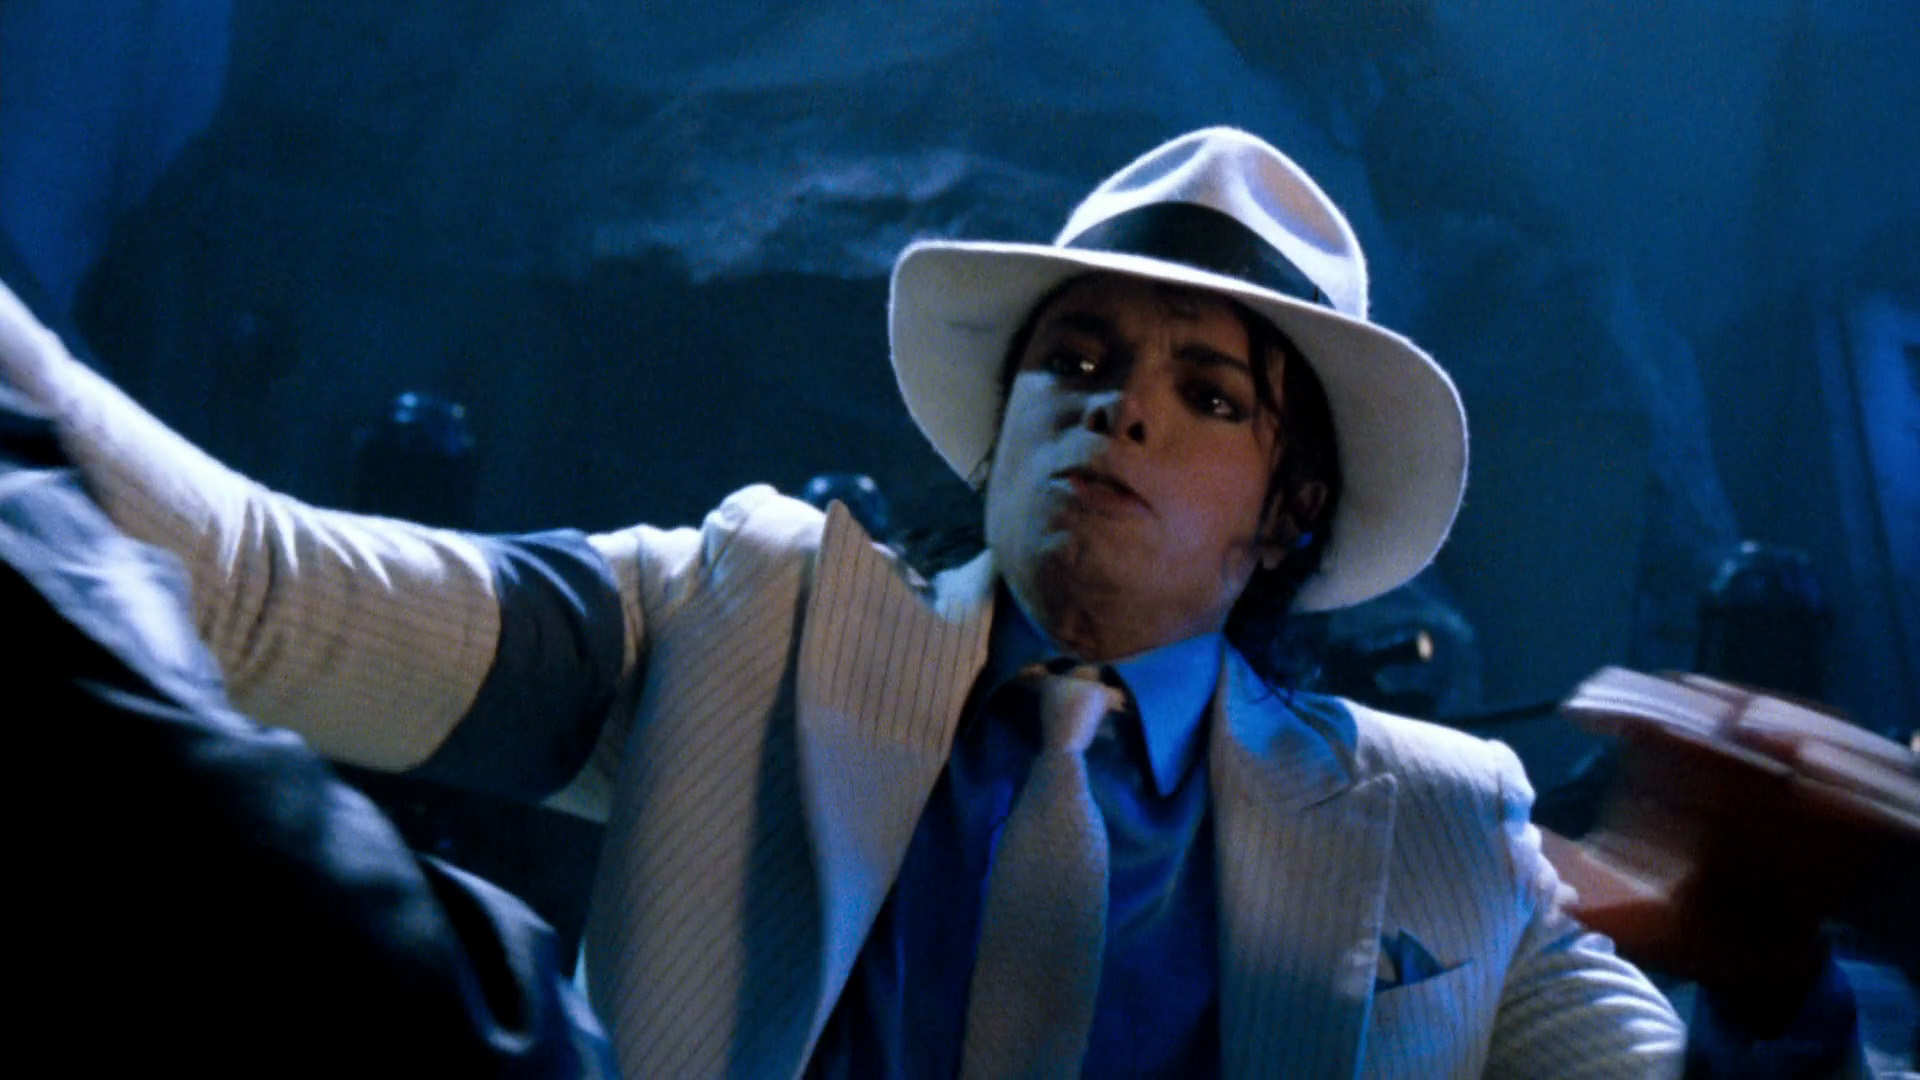 Michael Jackson images I LUV Smooth Criminal CrissloveMJ